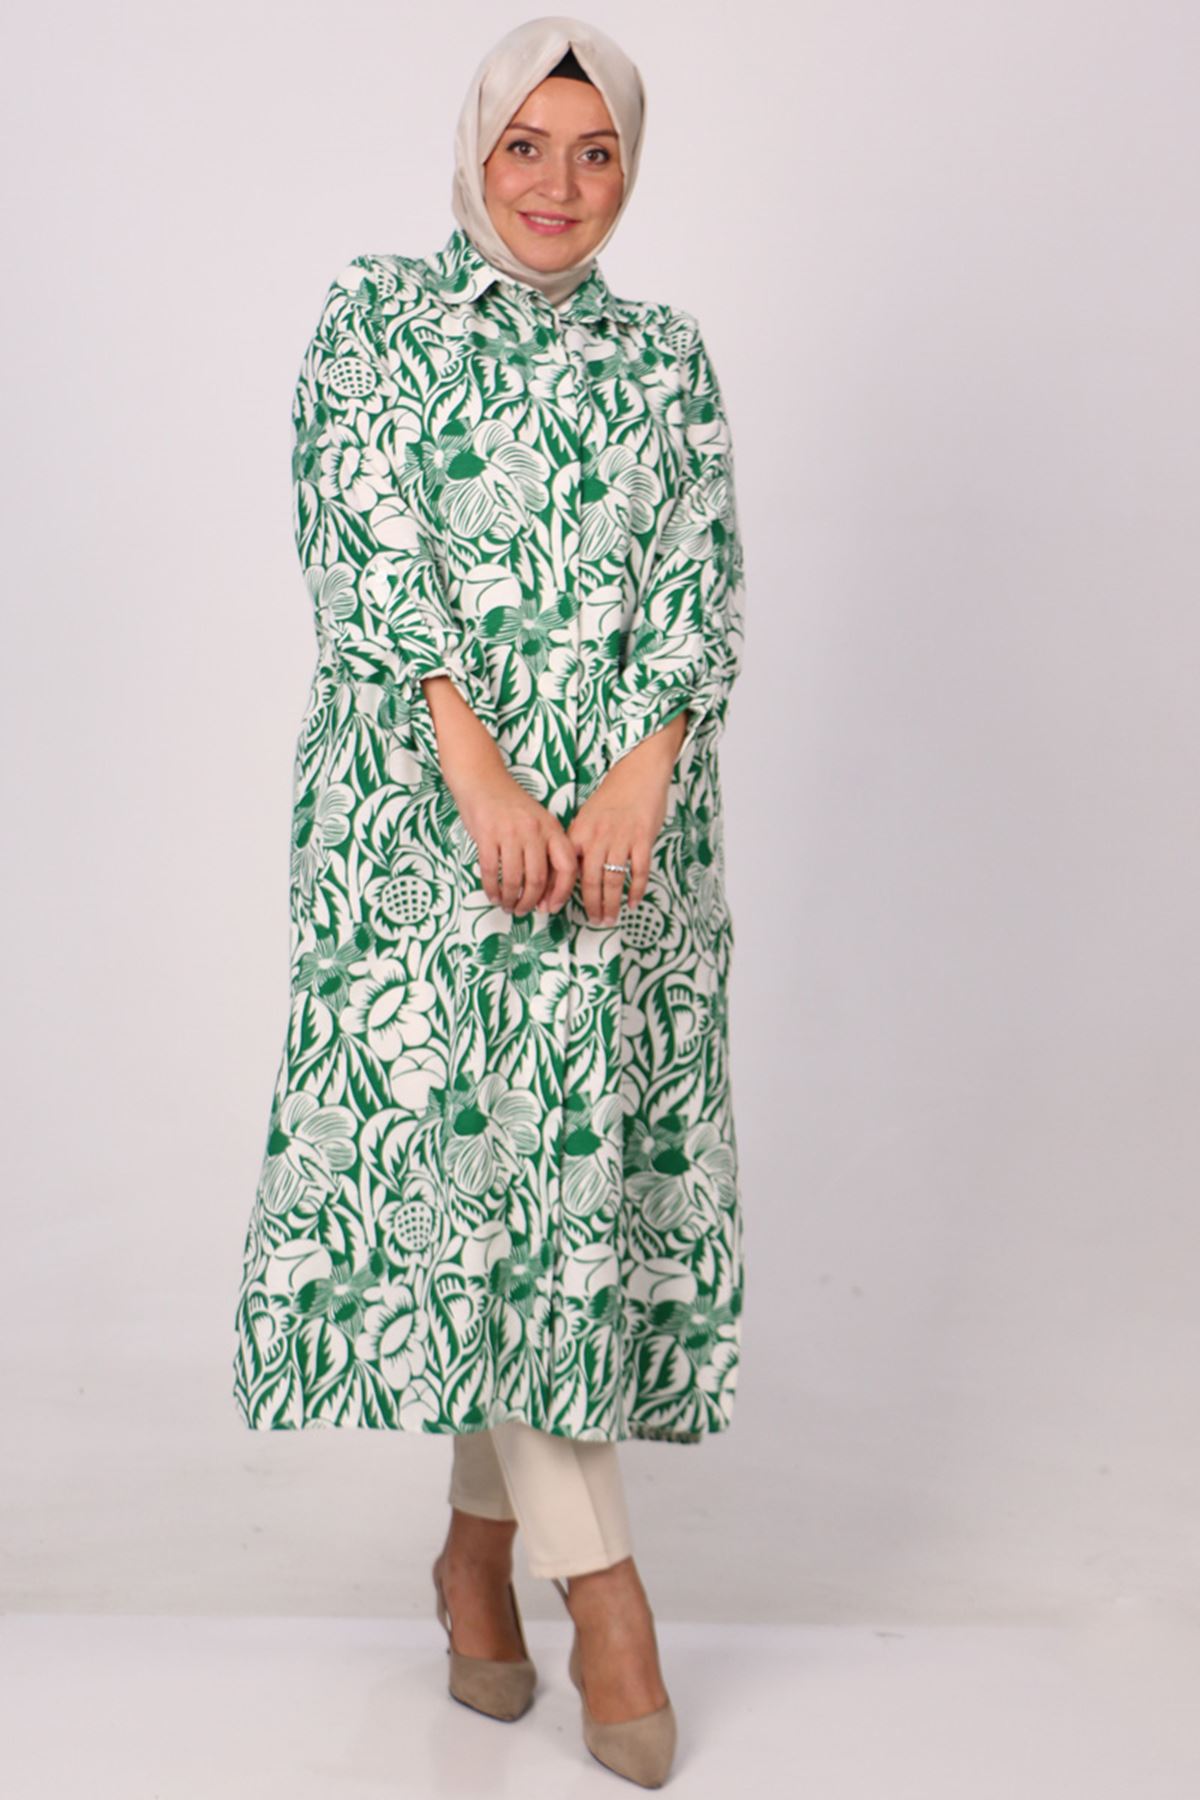 38120 Large Size Patterned Linen Shirt - Floral Pattern Green